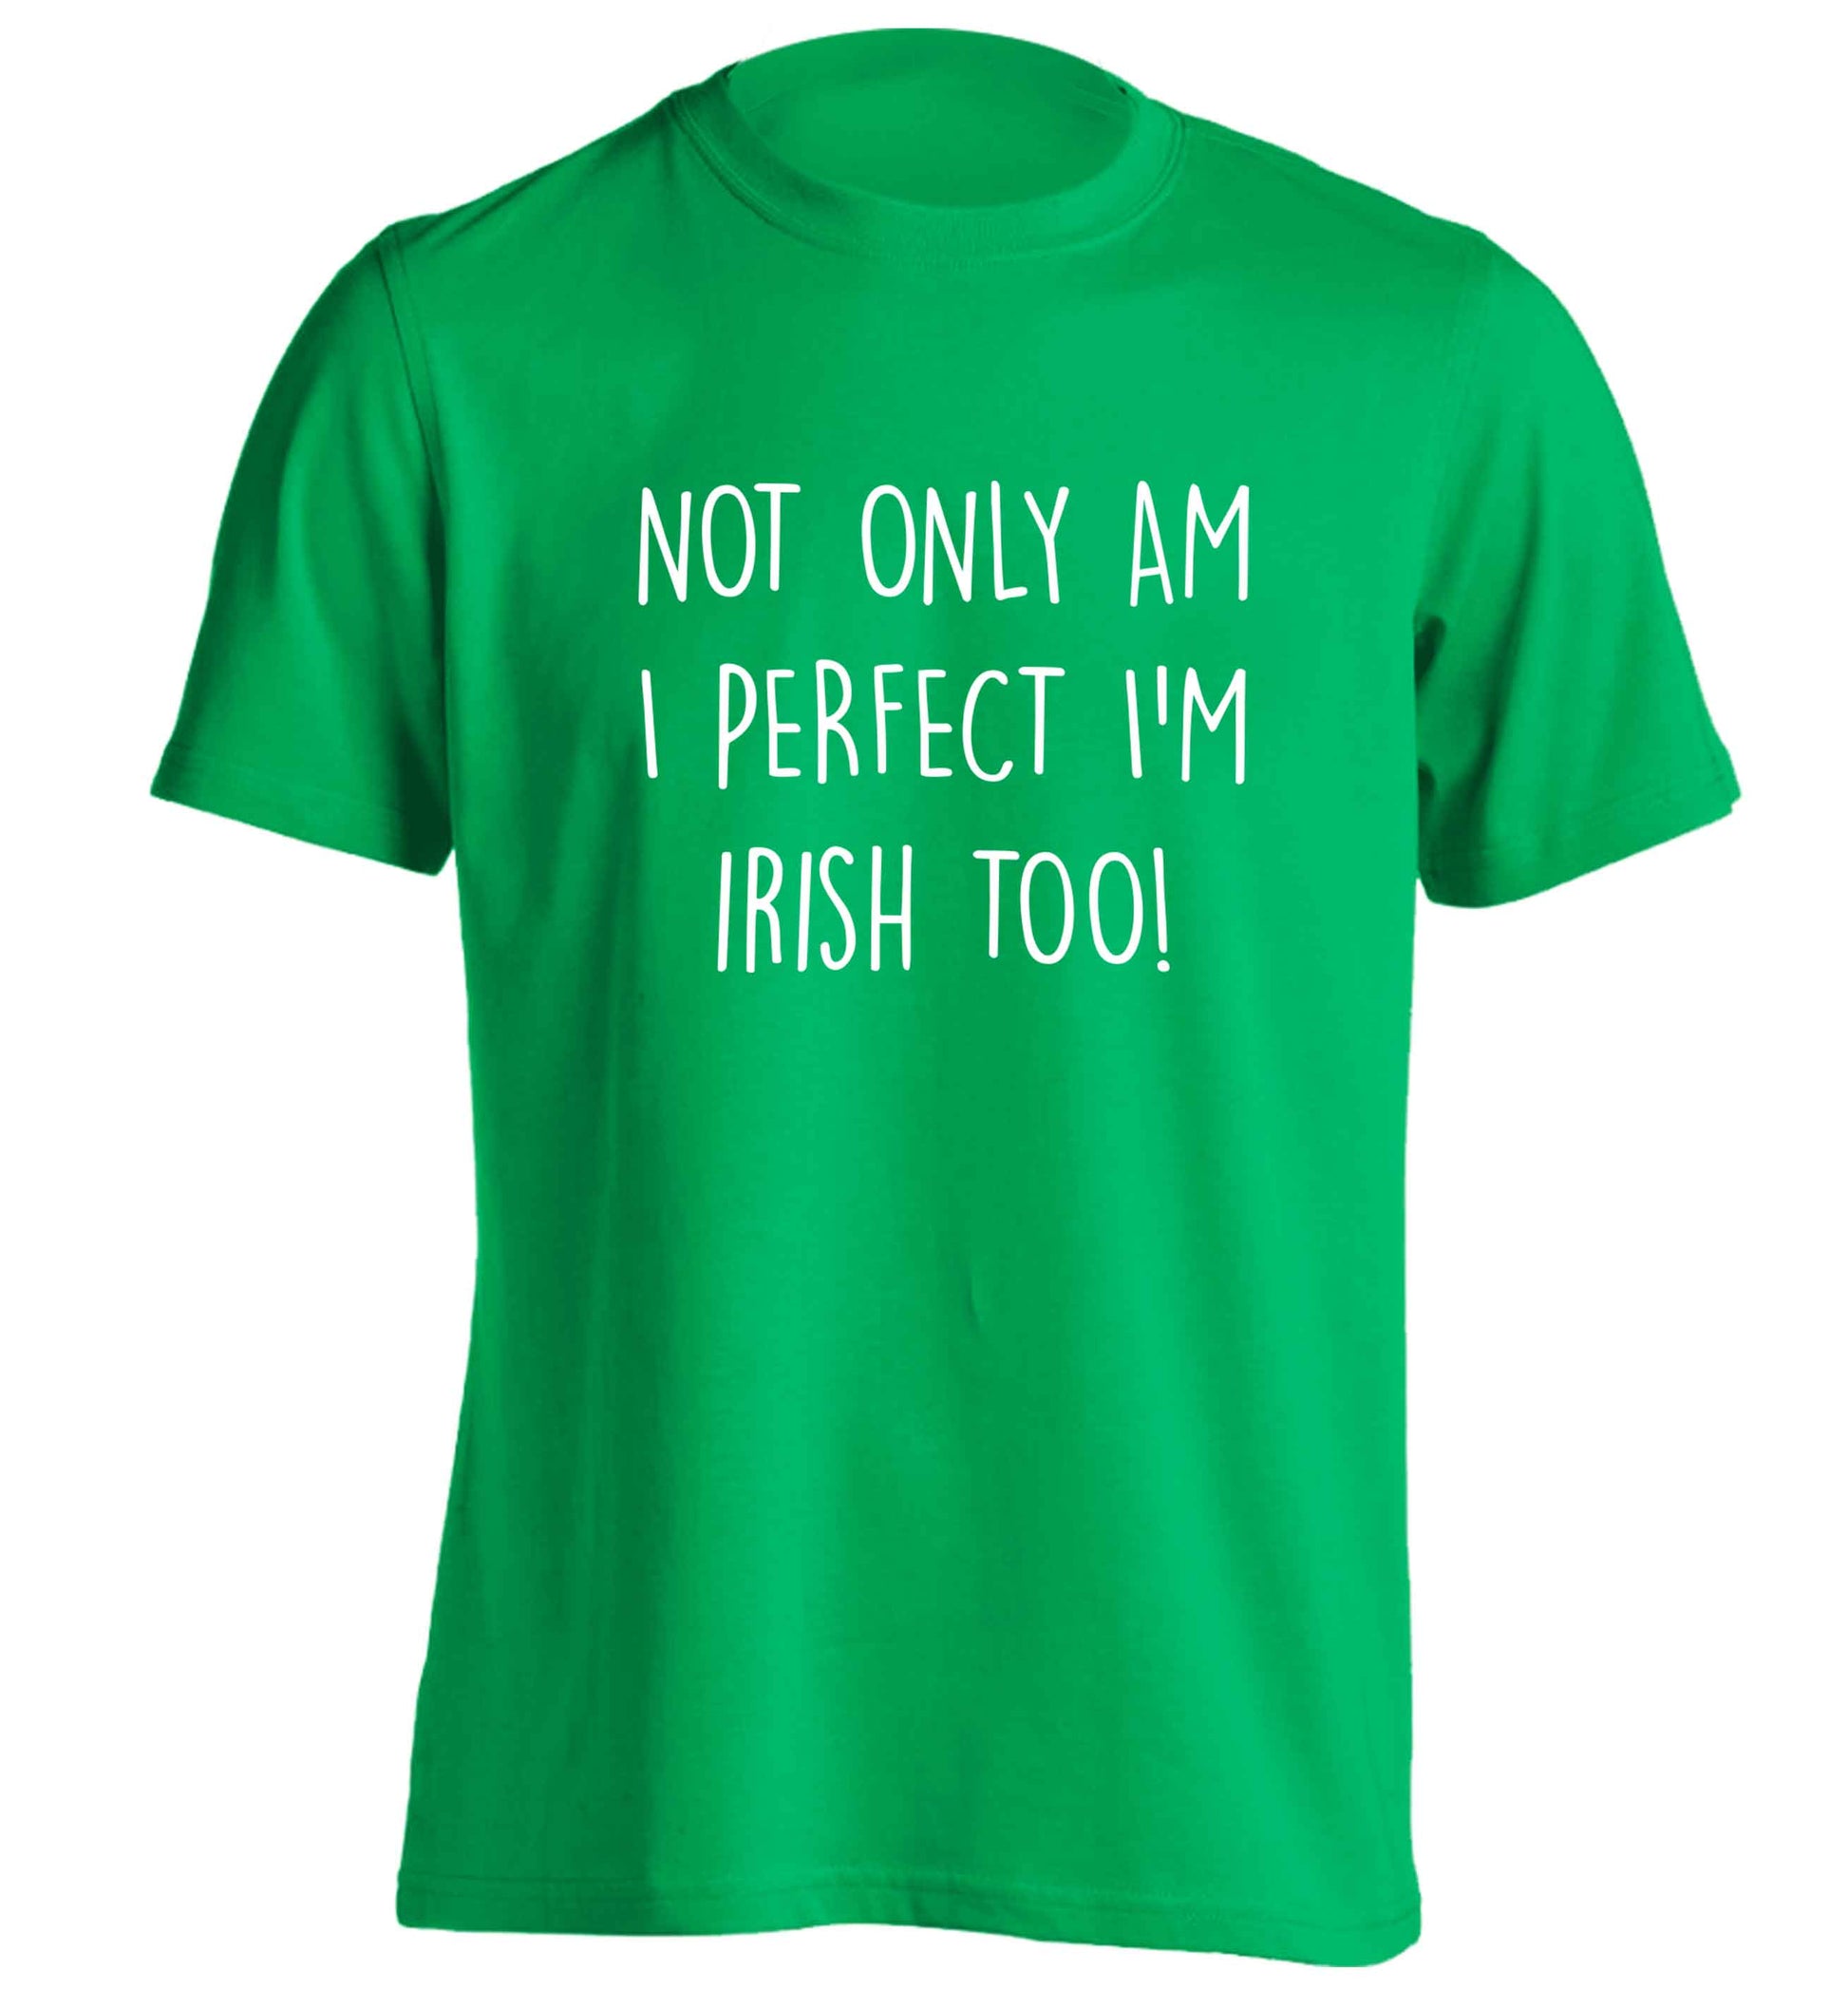 Not only am I perfect I'm Irish too! adults unisex green Tshirt 2XL